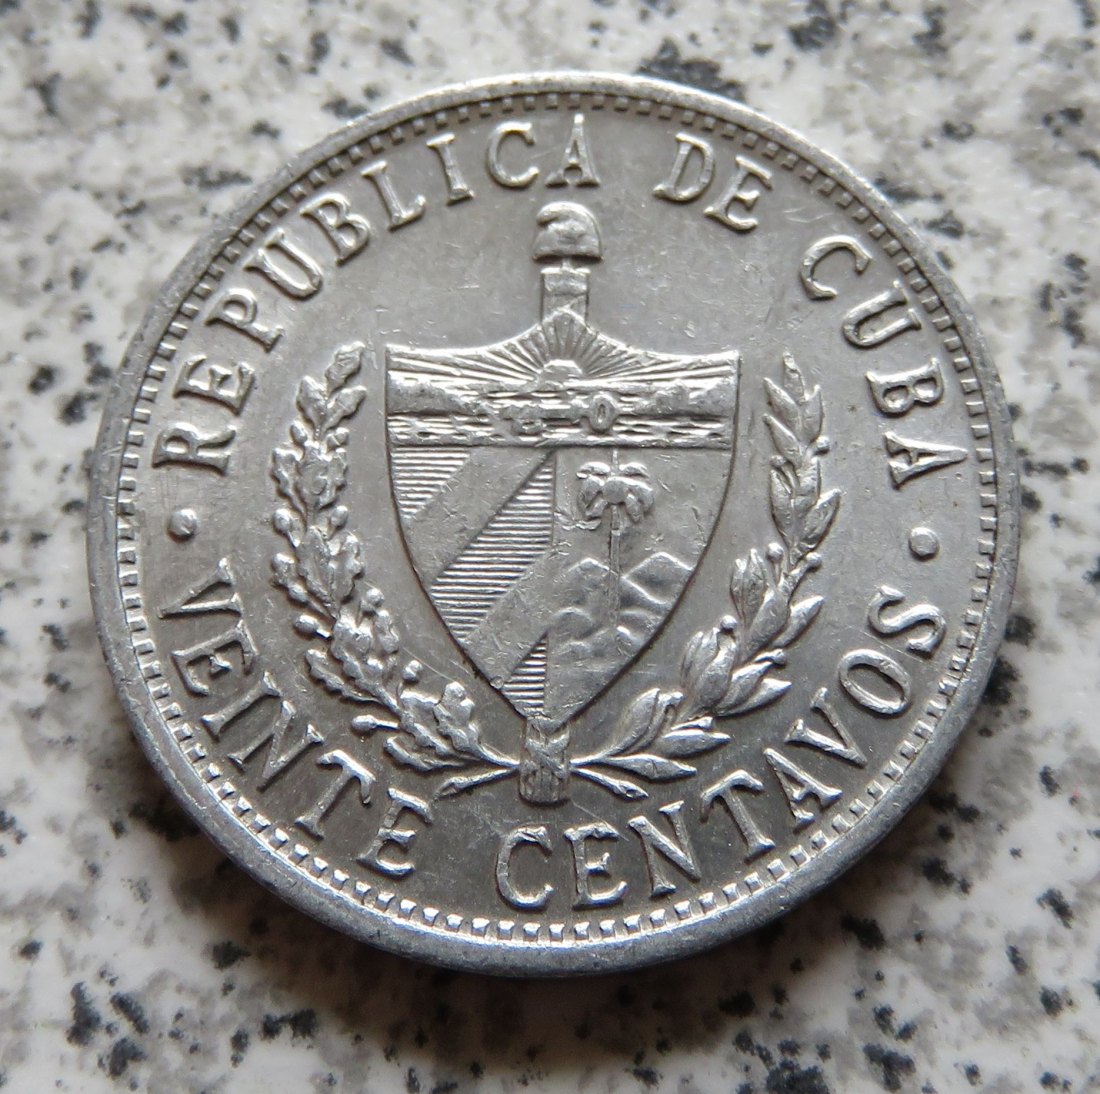  Cuba 20 Centavos 1969   